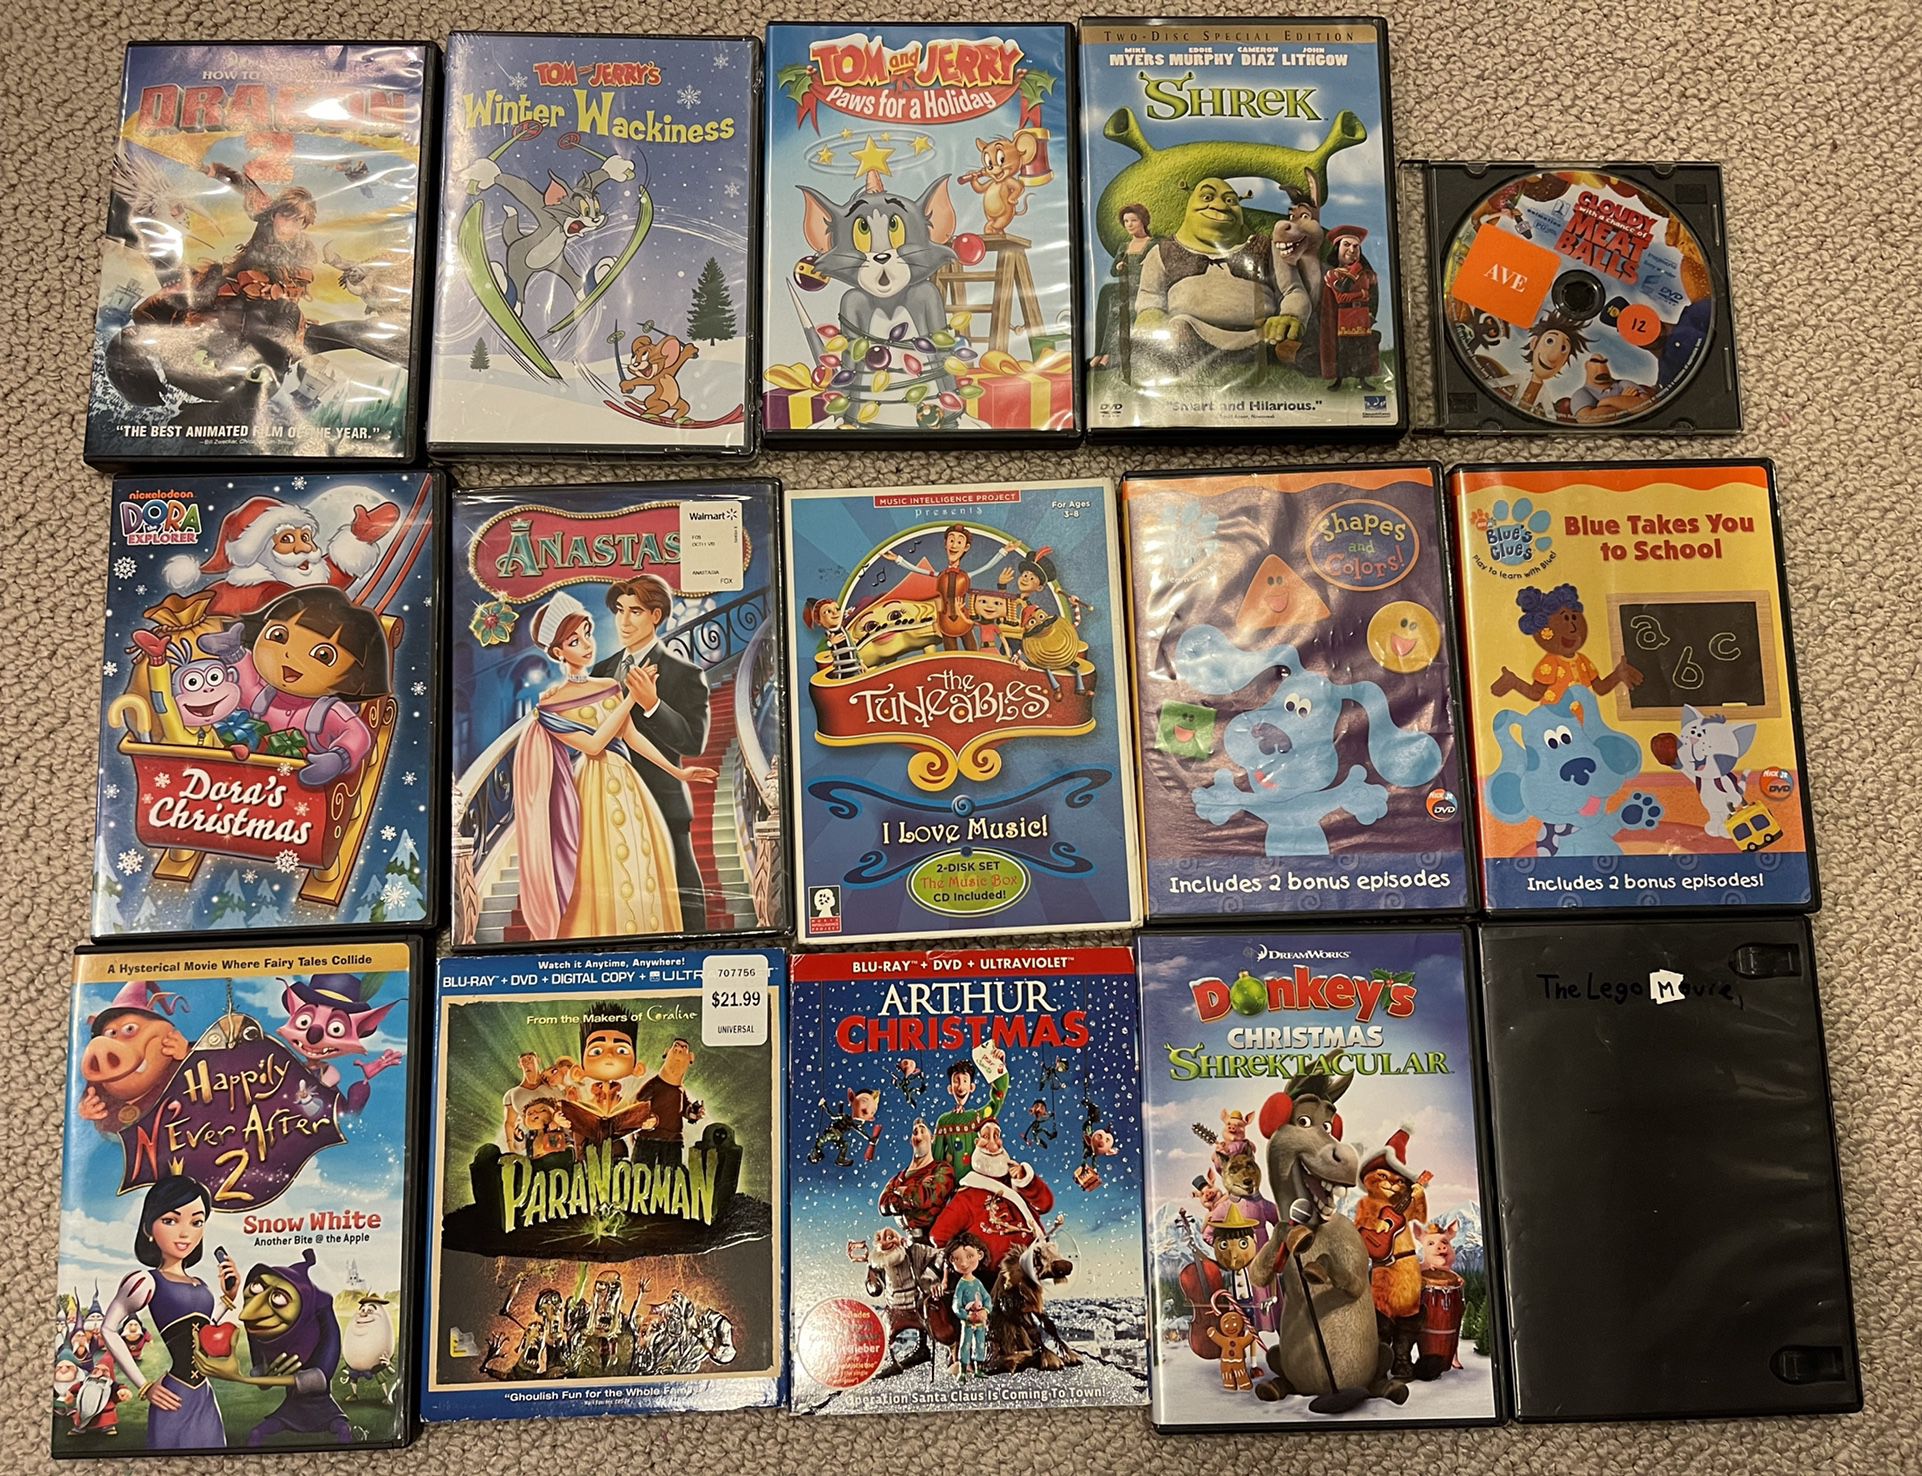 15 DVDs blue Ray Tom And jerry paranormal Shrek dragon 2 Arthur’s Christmas Movie For Kids Classics Cartoons 